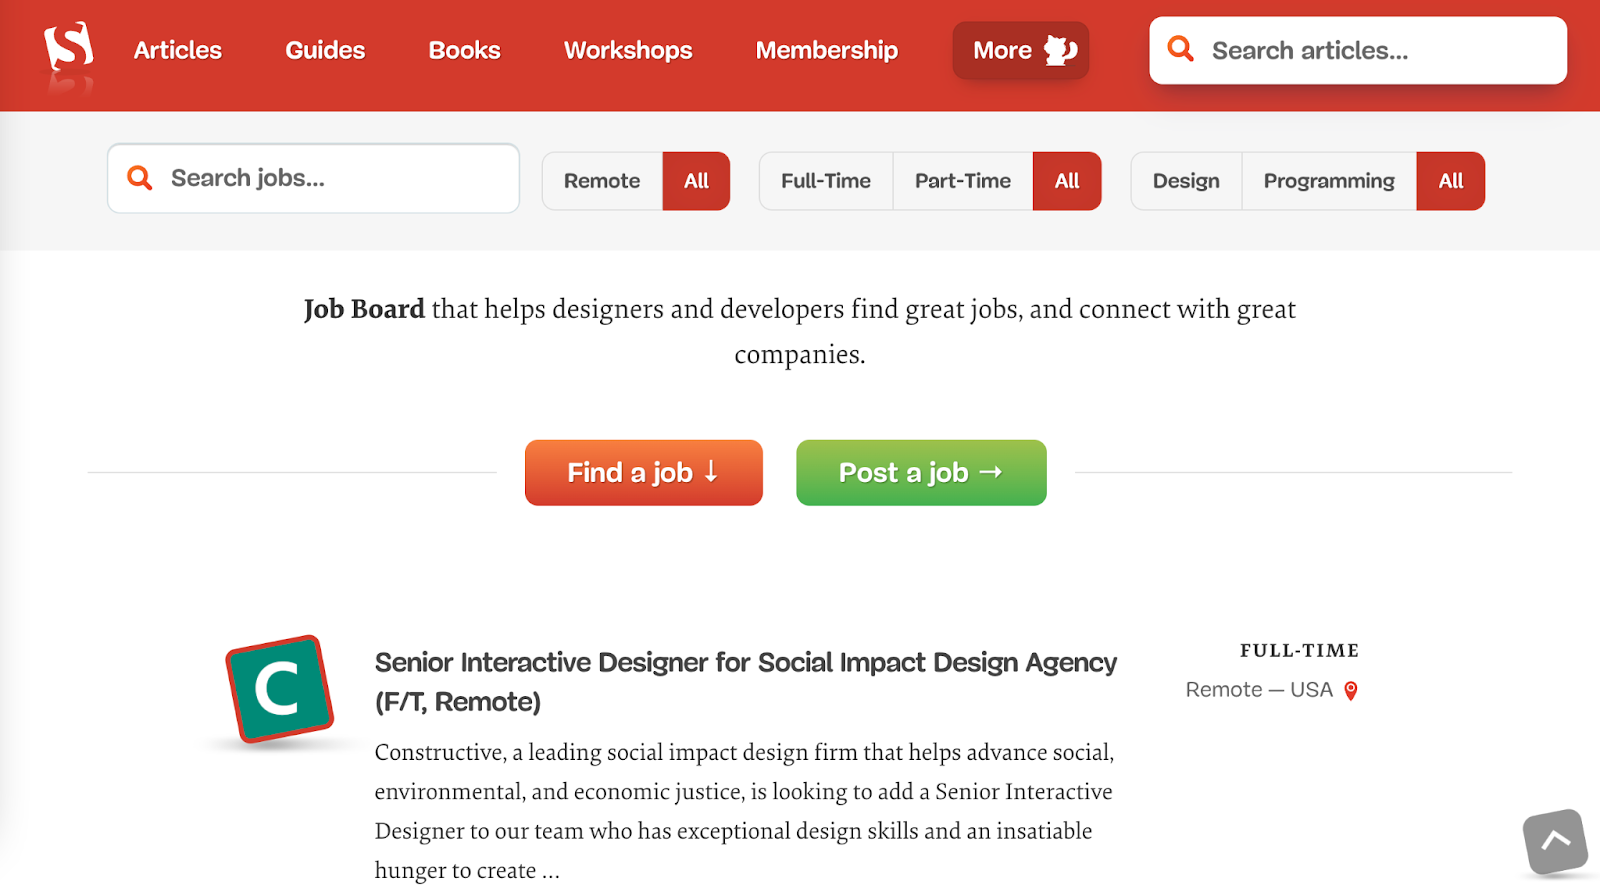 hire WordPress developers